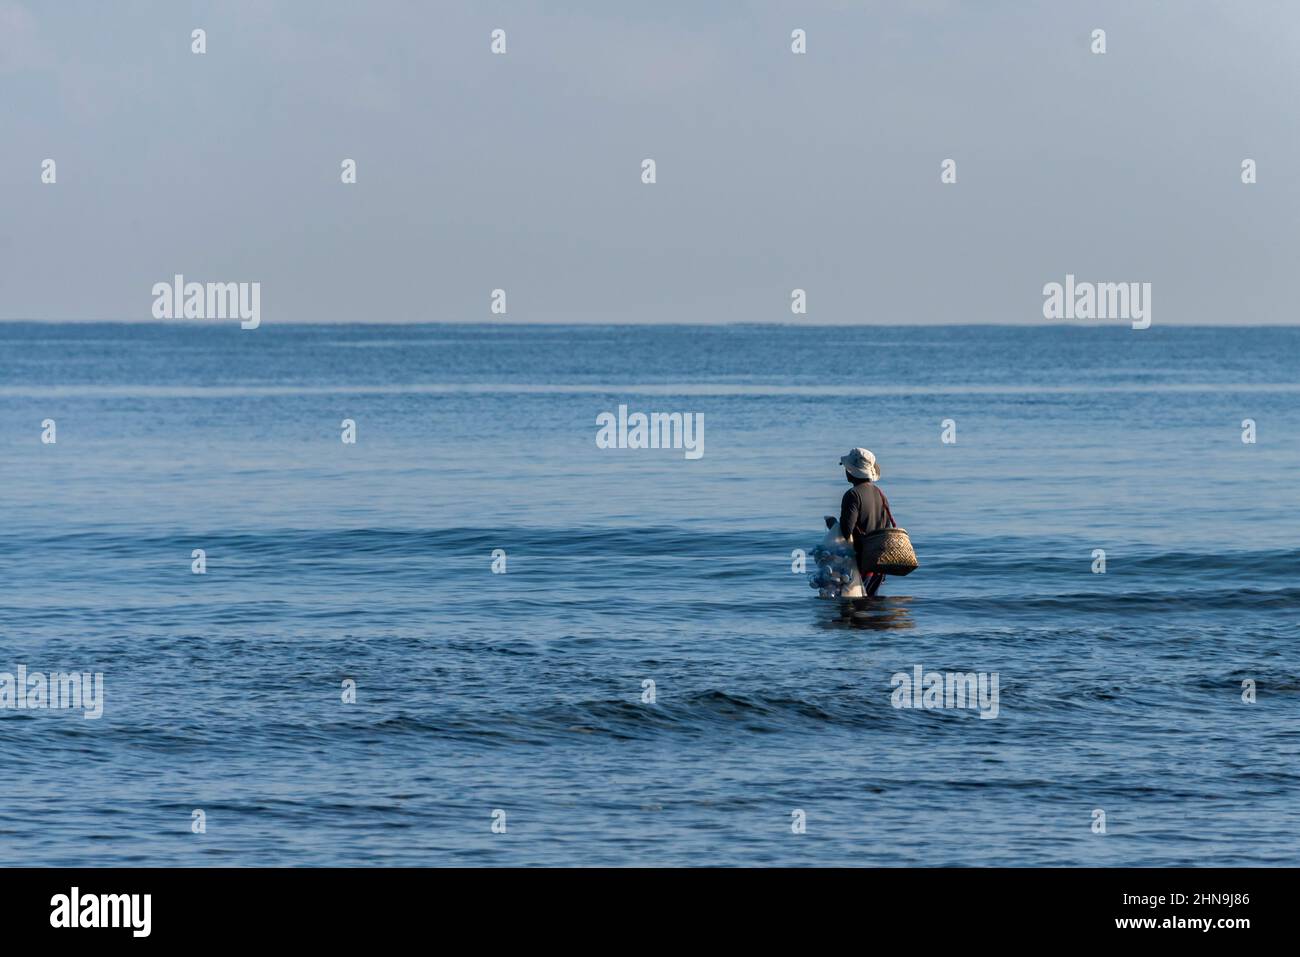 Man walking on the sea holding fishing net Stock Photo